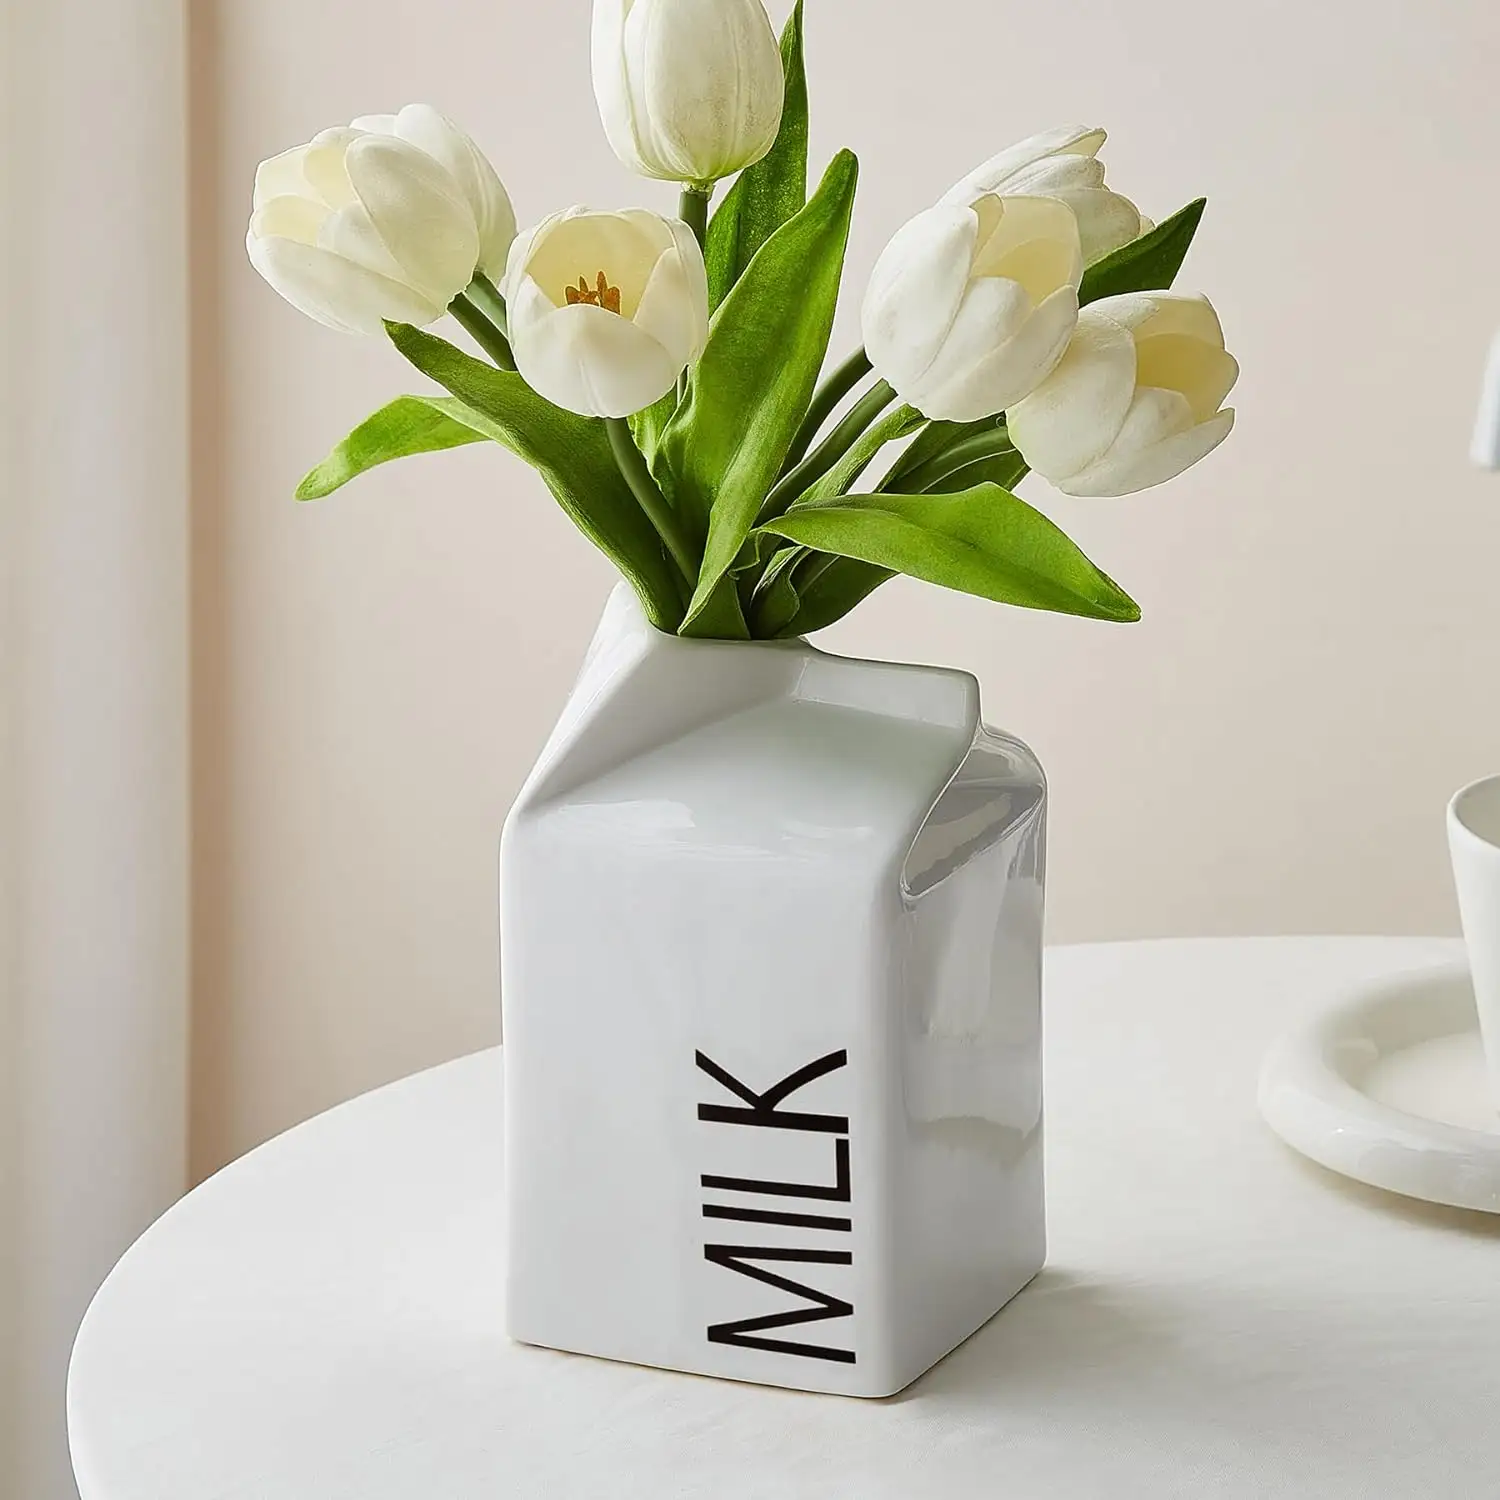 White Vintage Ceramic Vase Cute Retro Milk Carton Decorative Unique Home s for Decor Living Room Table Dining Office Decoration